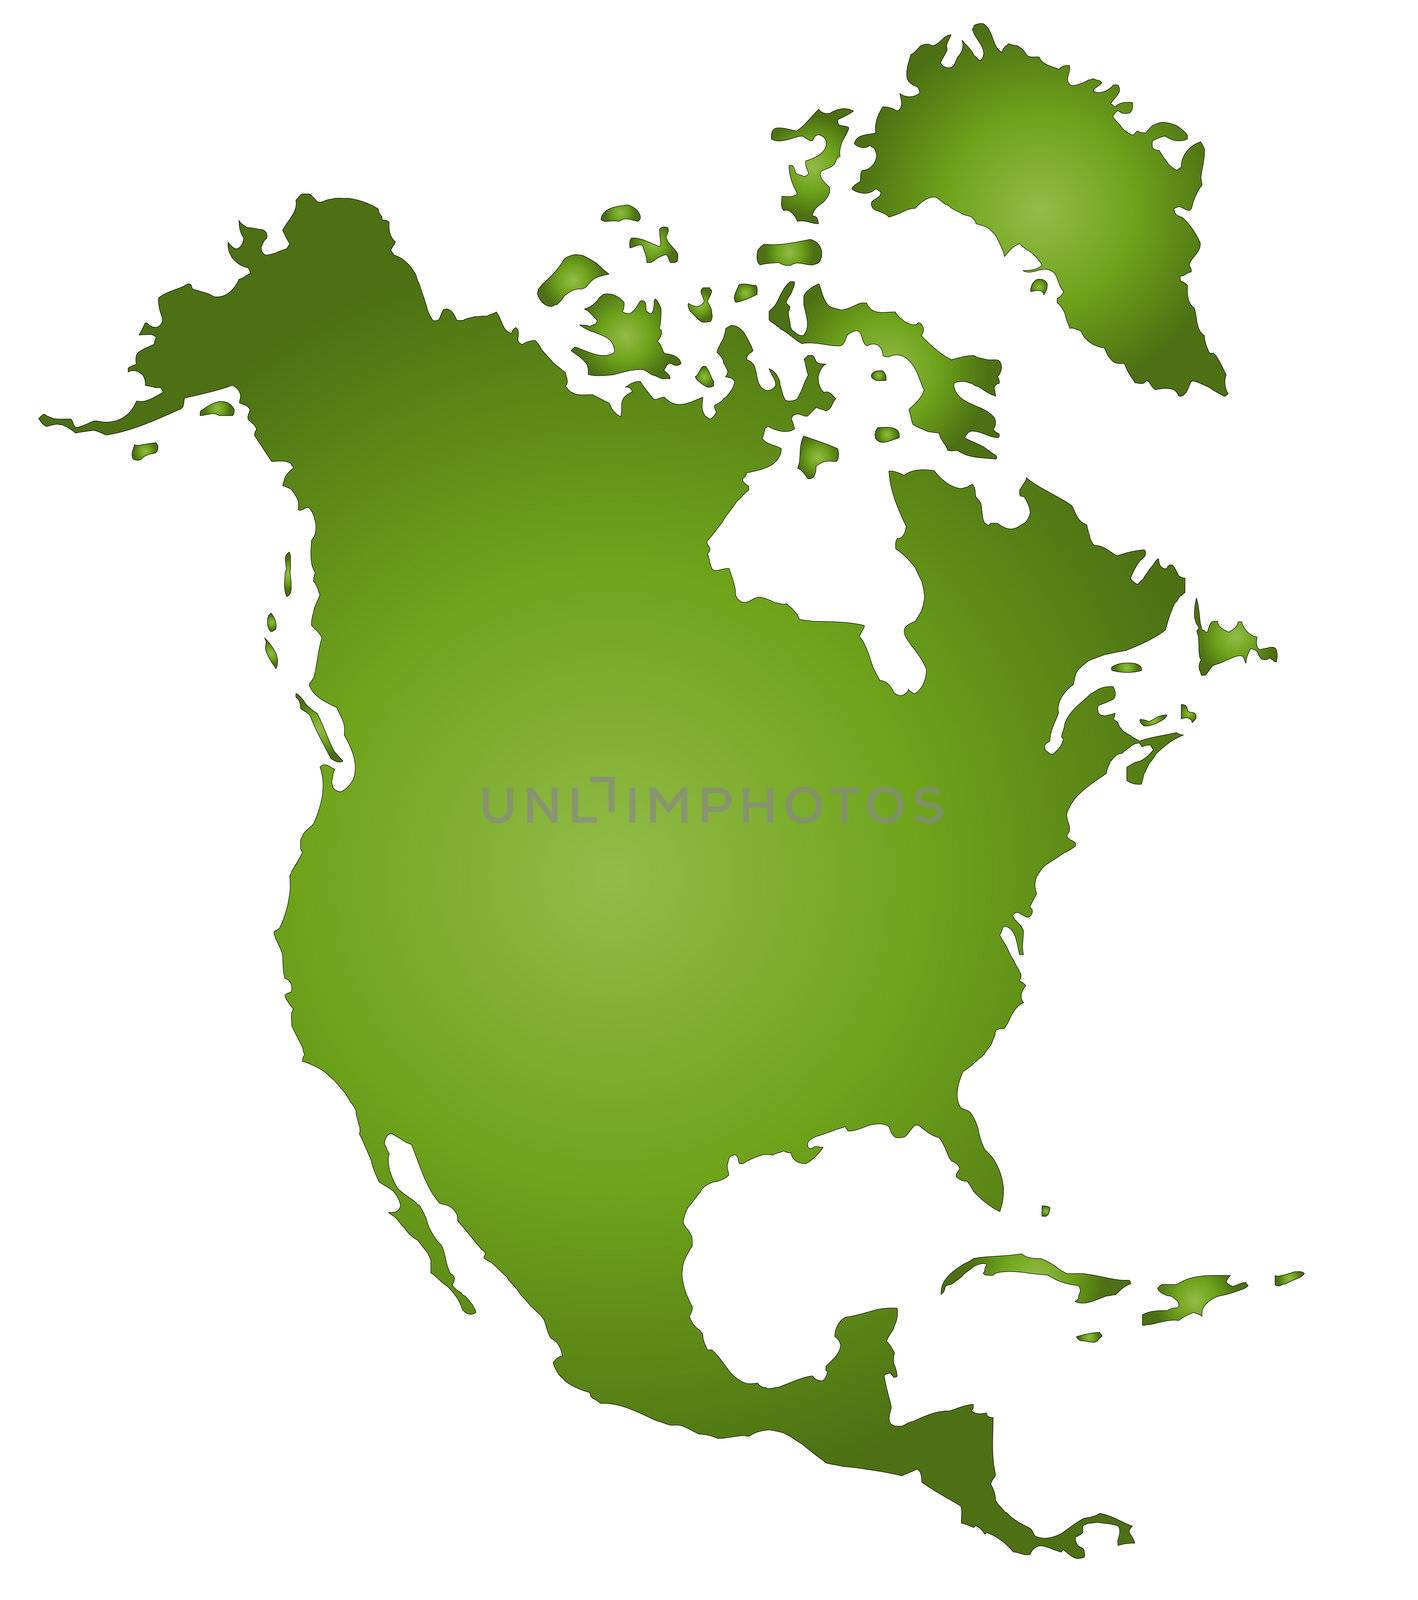 Map Of North America by kaarsten